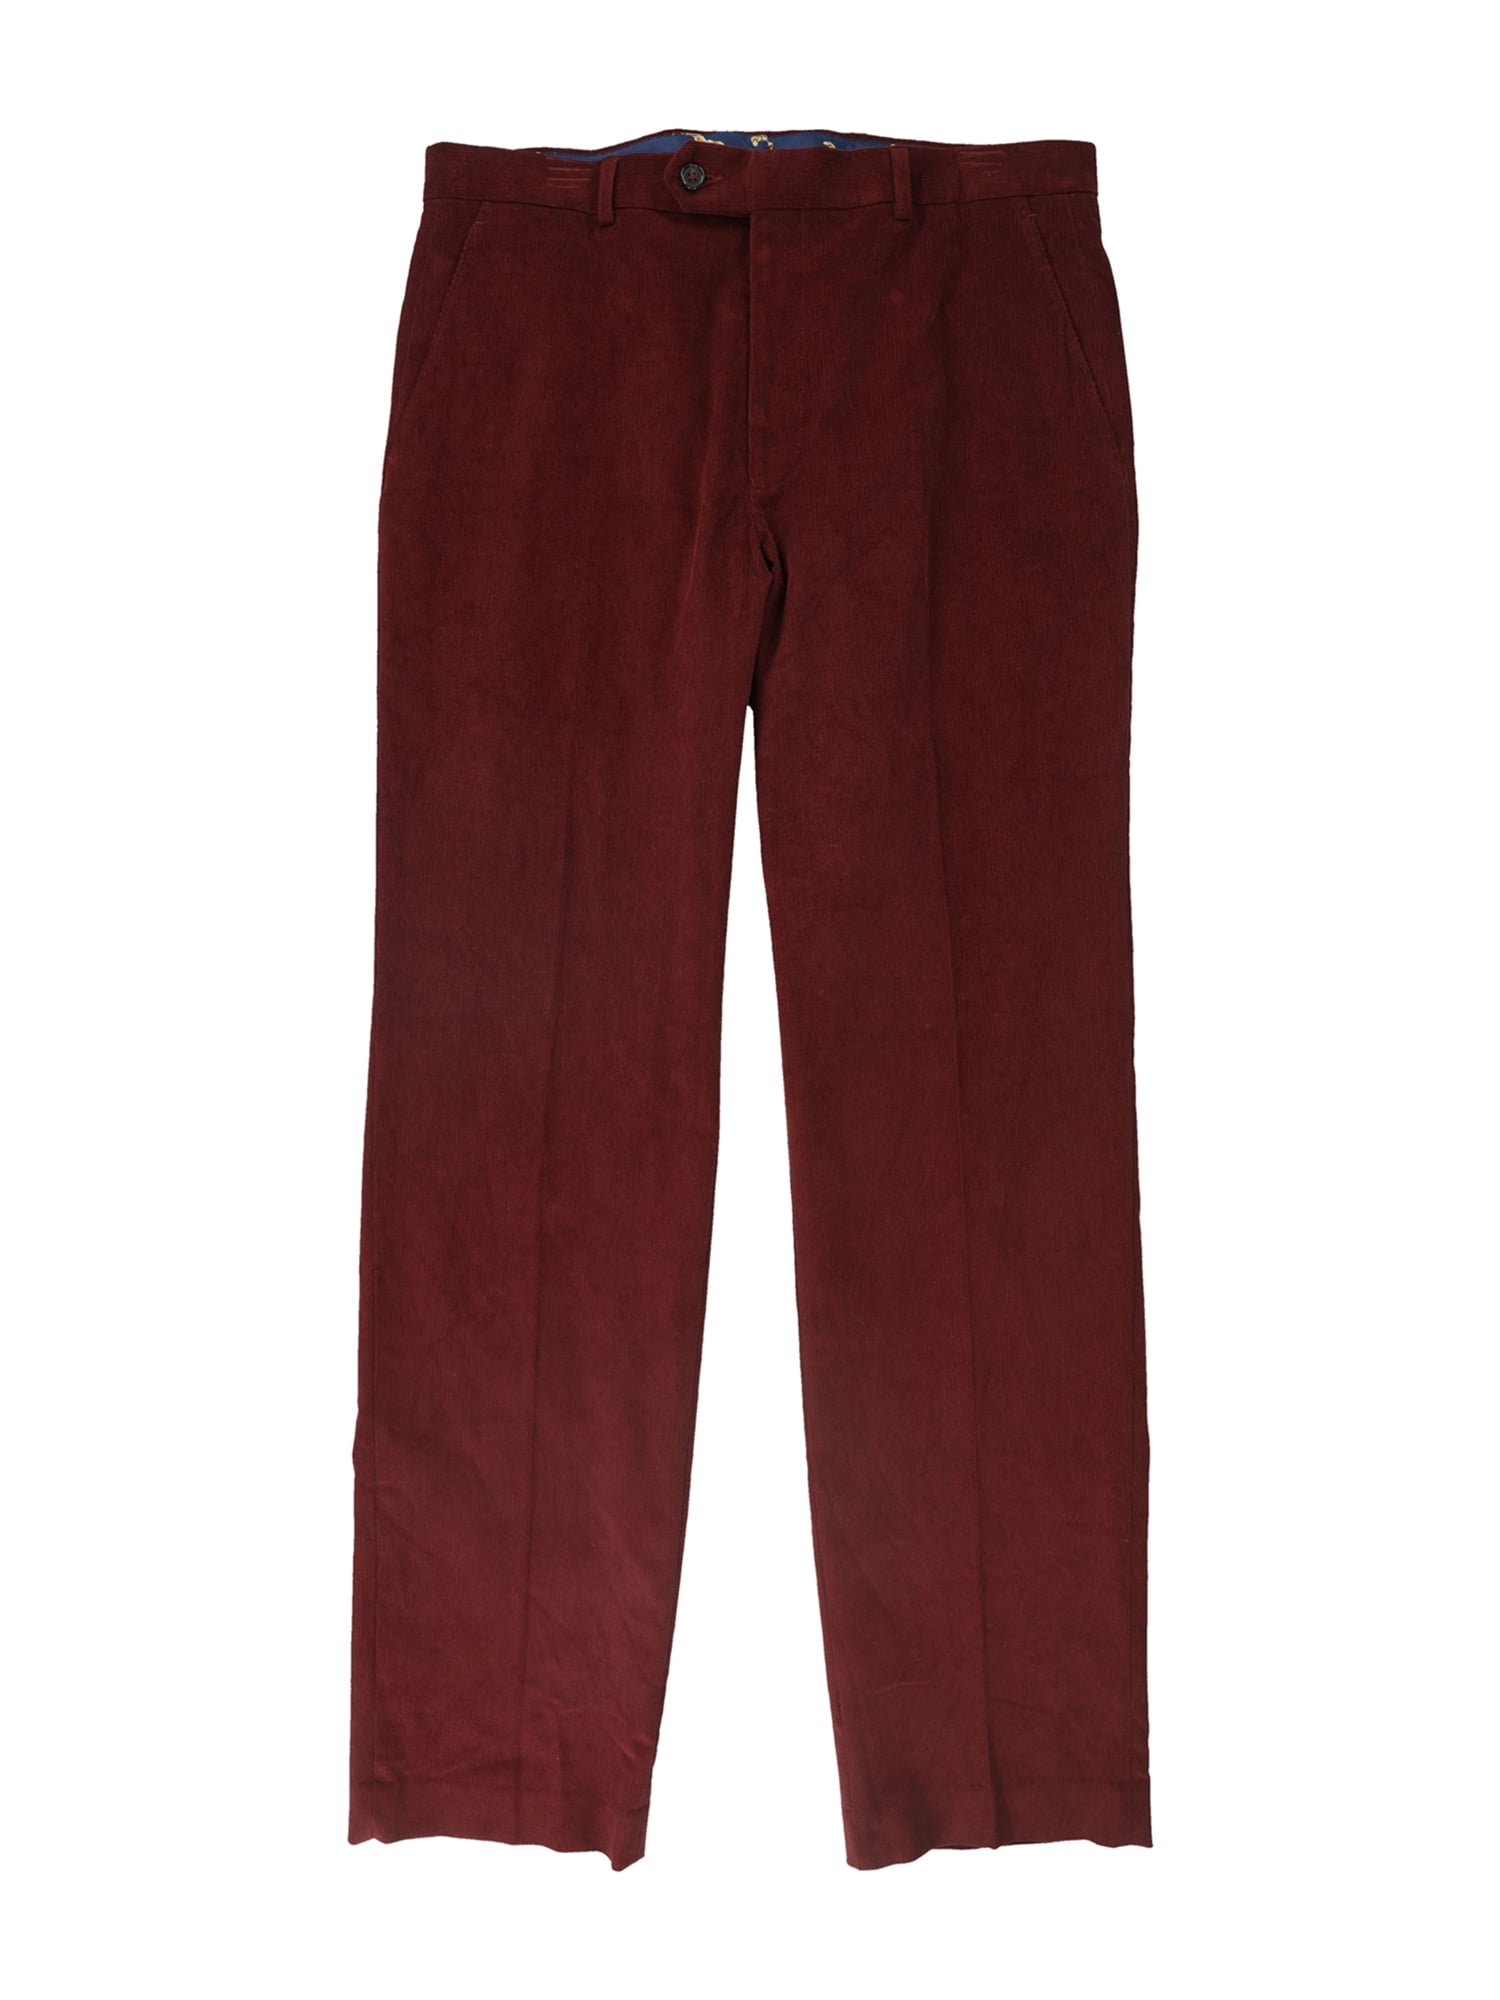 Ralph Lauren Mens Flat Front Casual Corduroy Pants cranberry 33x32 ...